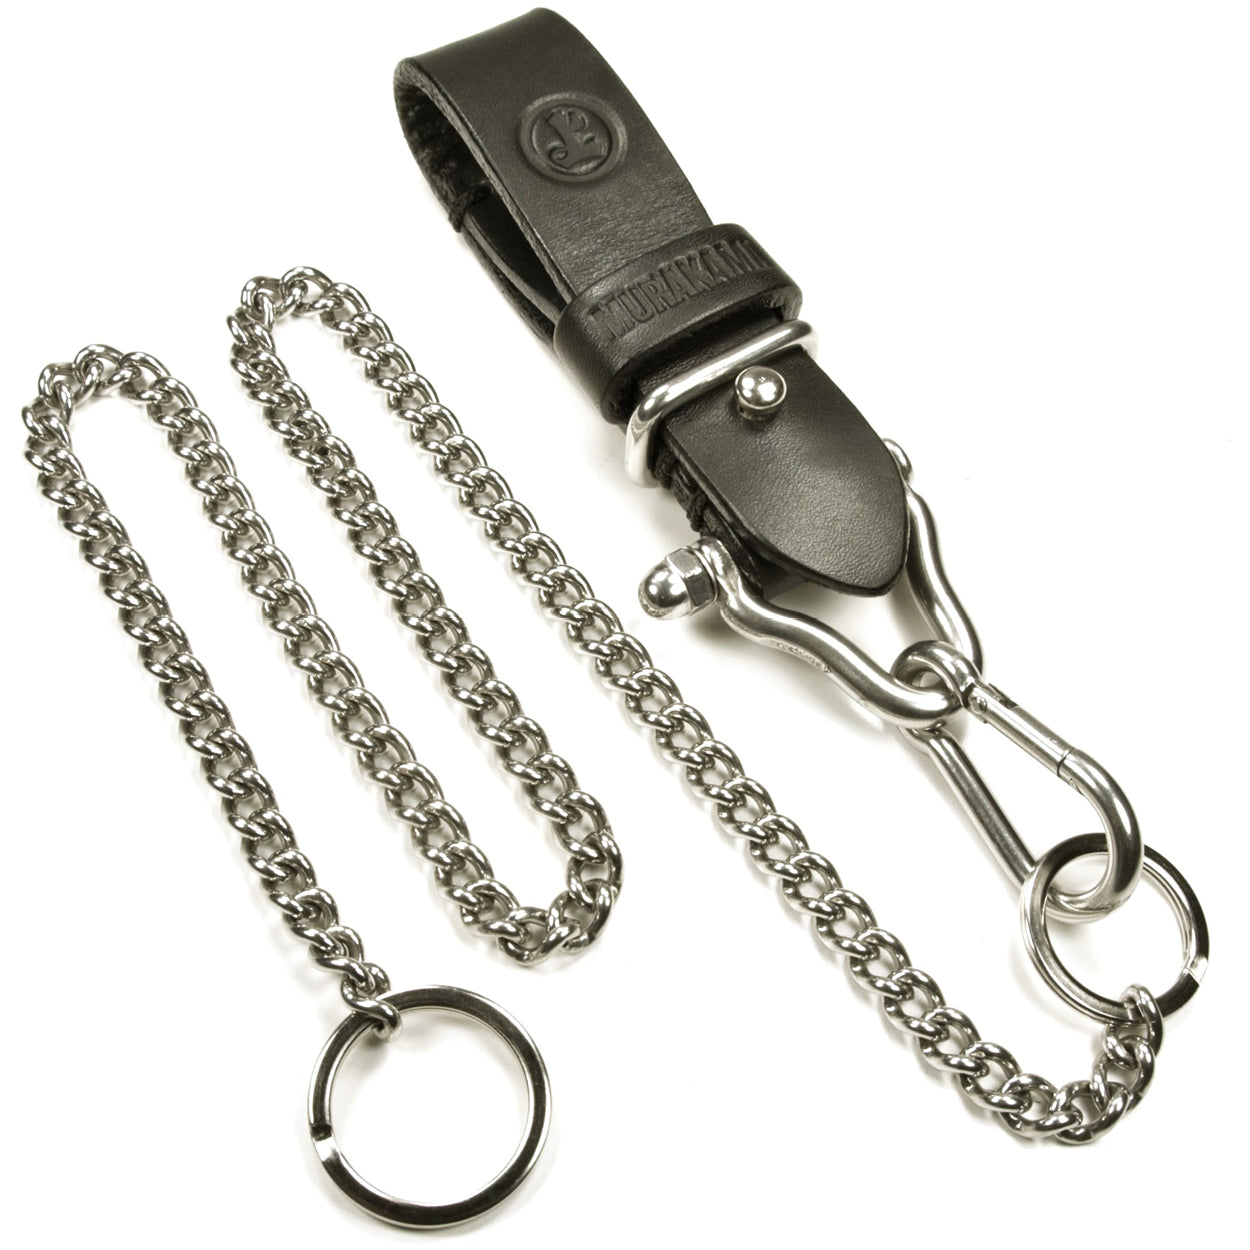 Belt Loop Key Chain - Twisted